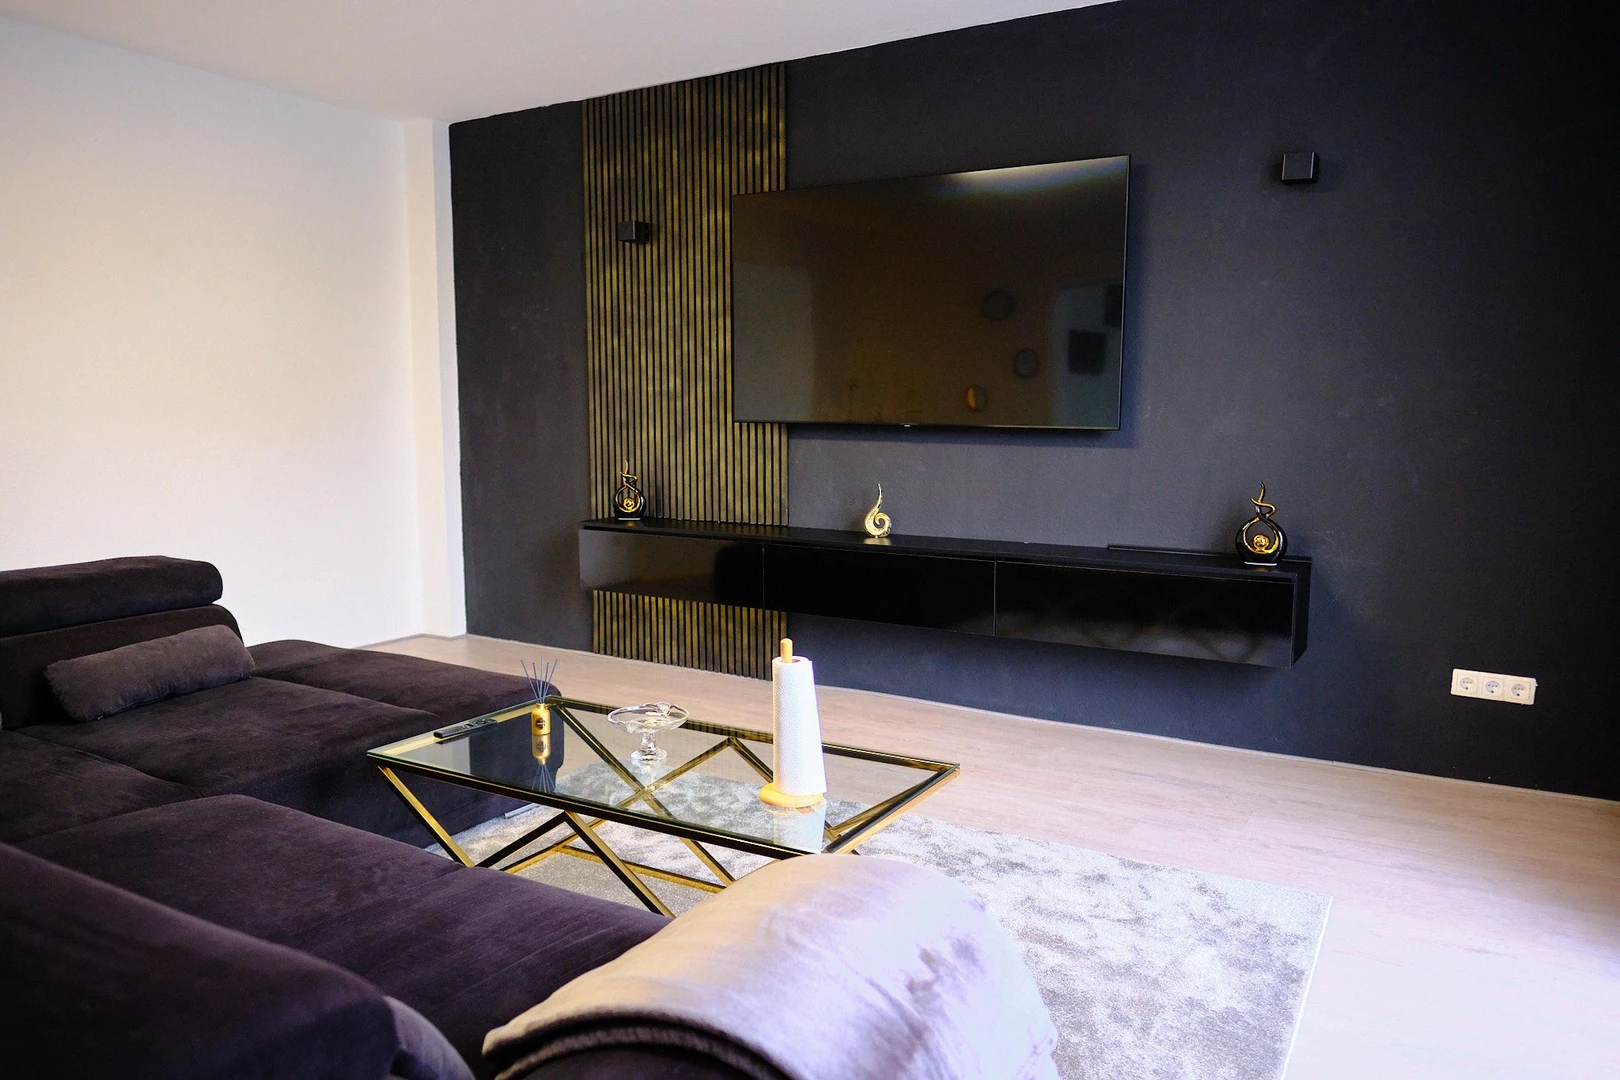 Room for rent in a shared flat in Mülheim An Der Ruhr